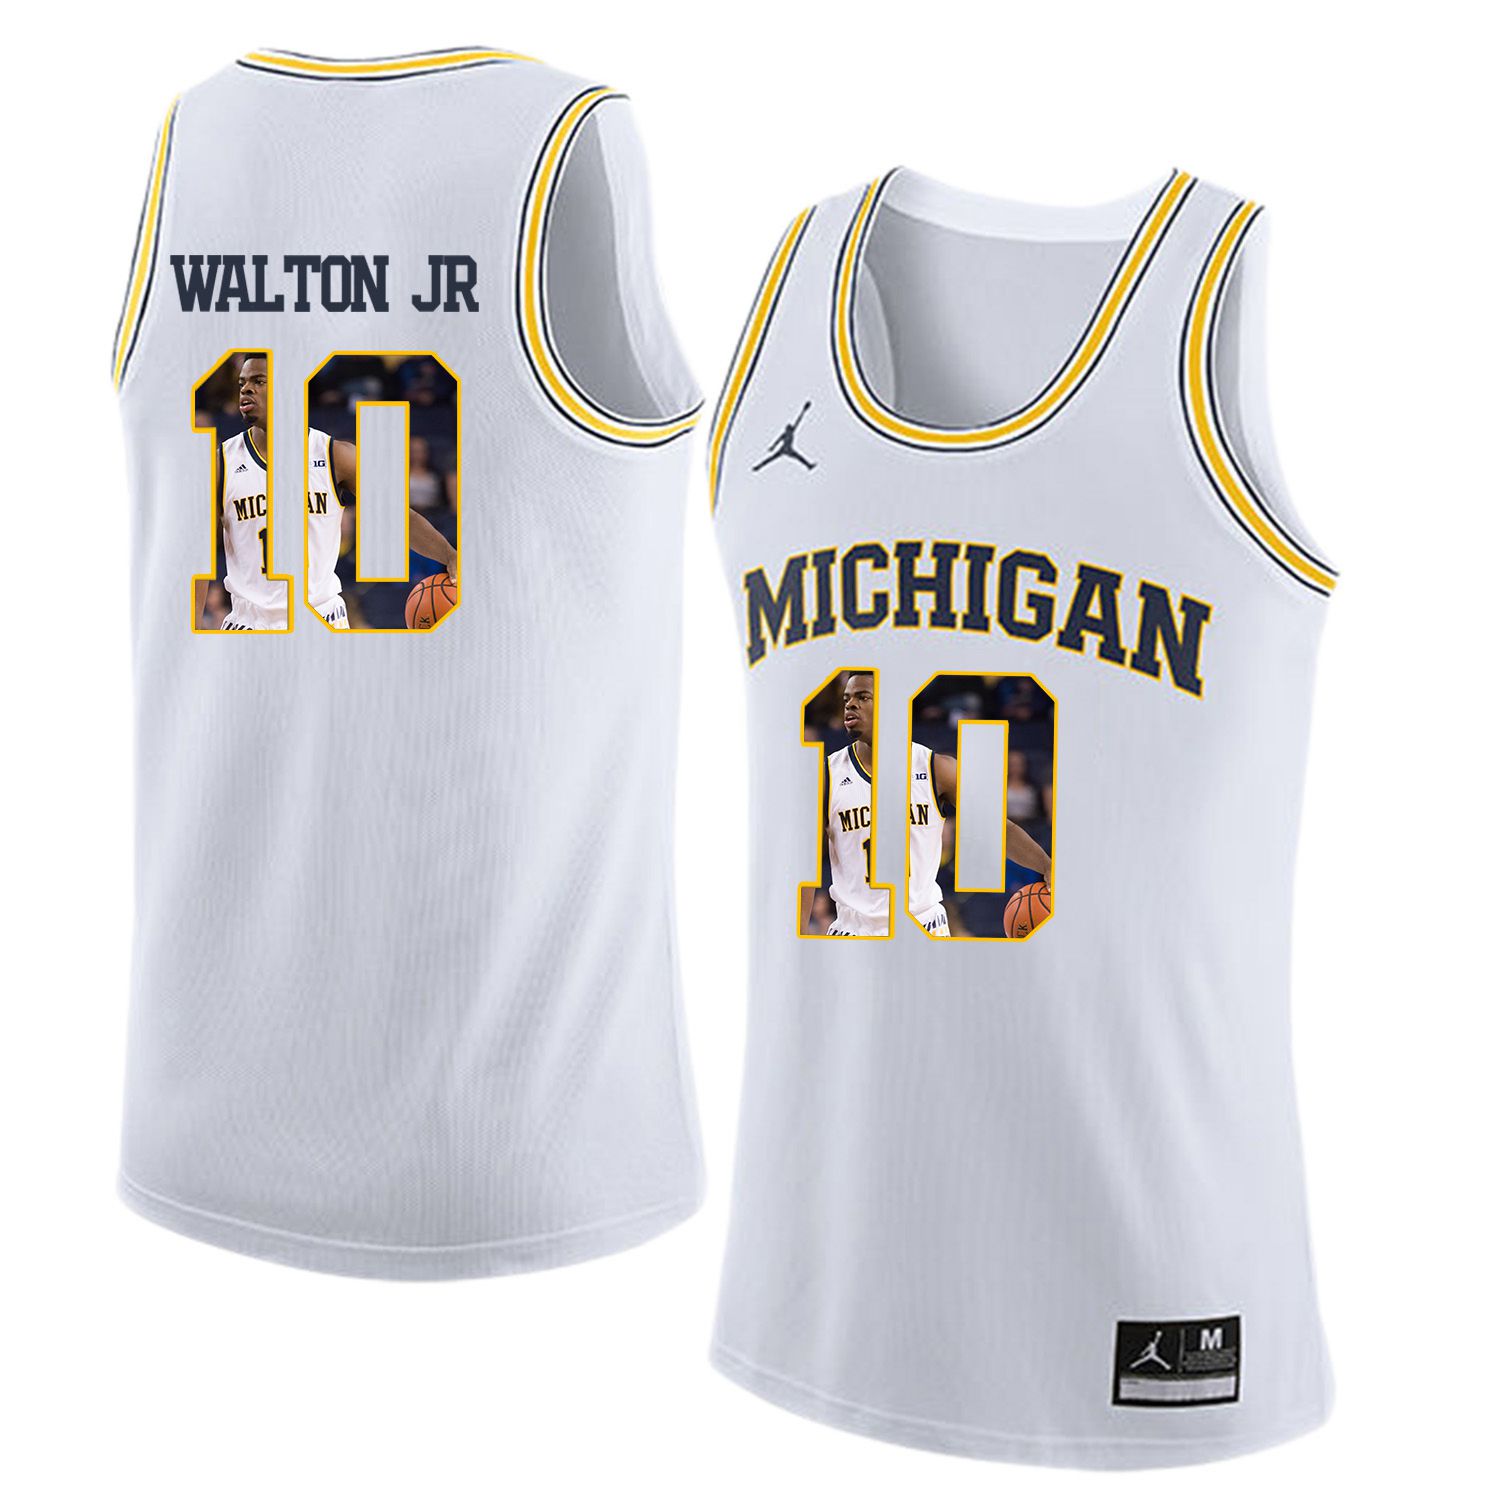 Men Jordan University of Michigan Basketball White 10 walton jr Fashion Edition Customized NCAA Jerseys